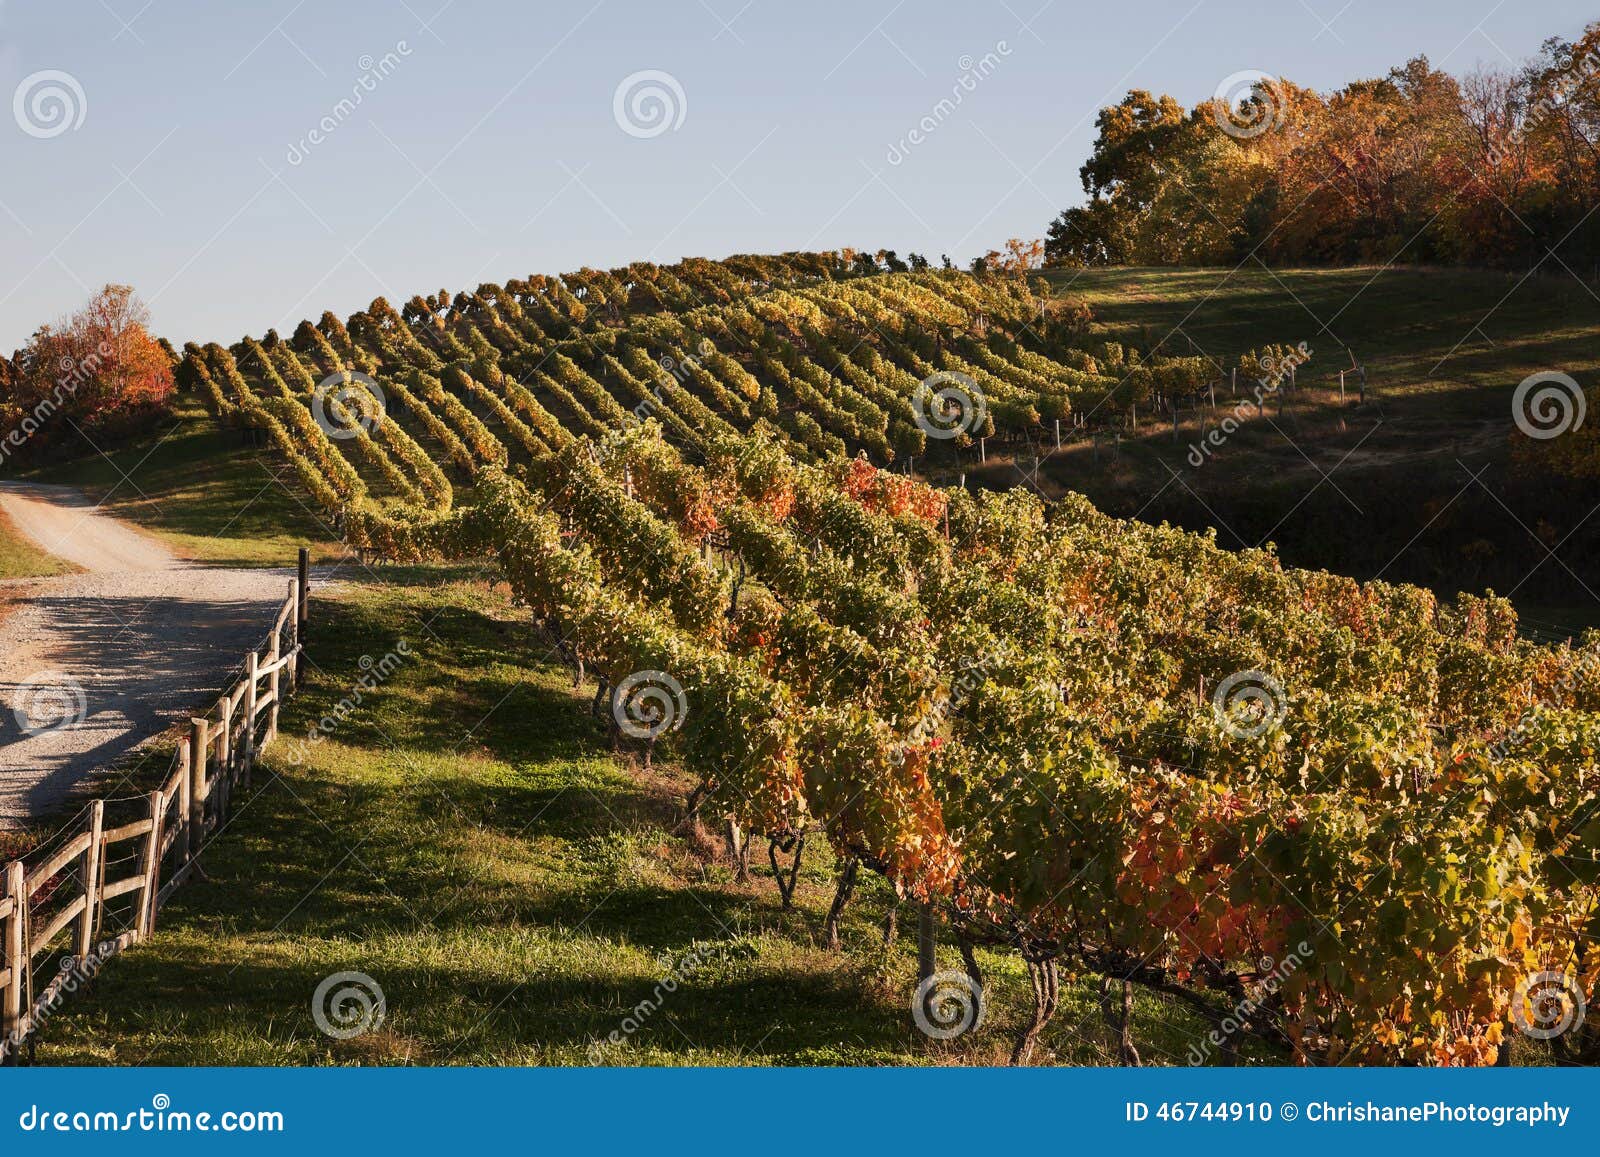 virginia wine country in autumn